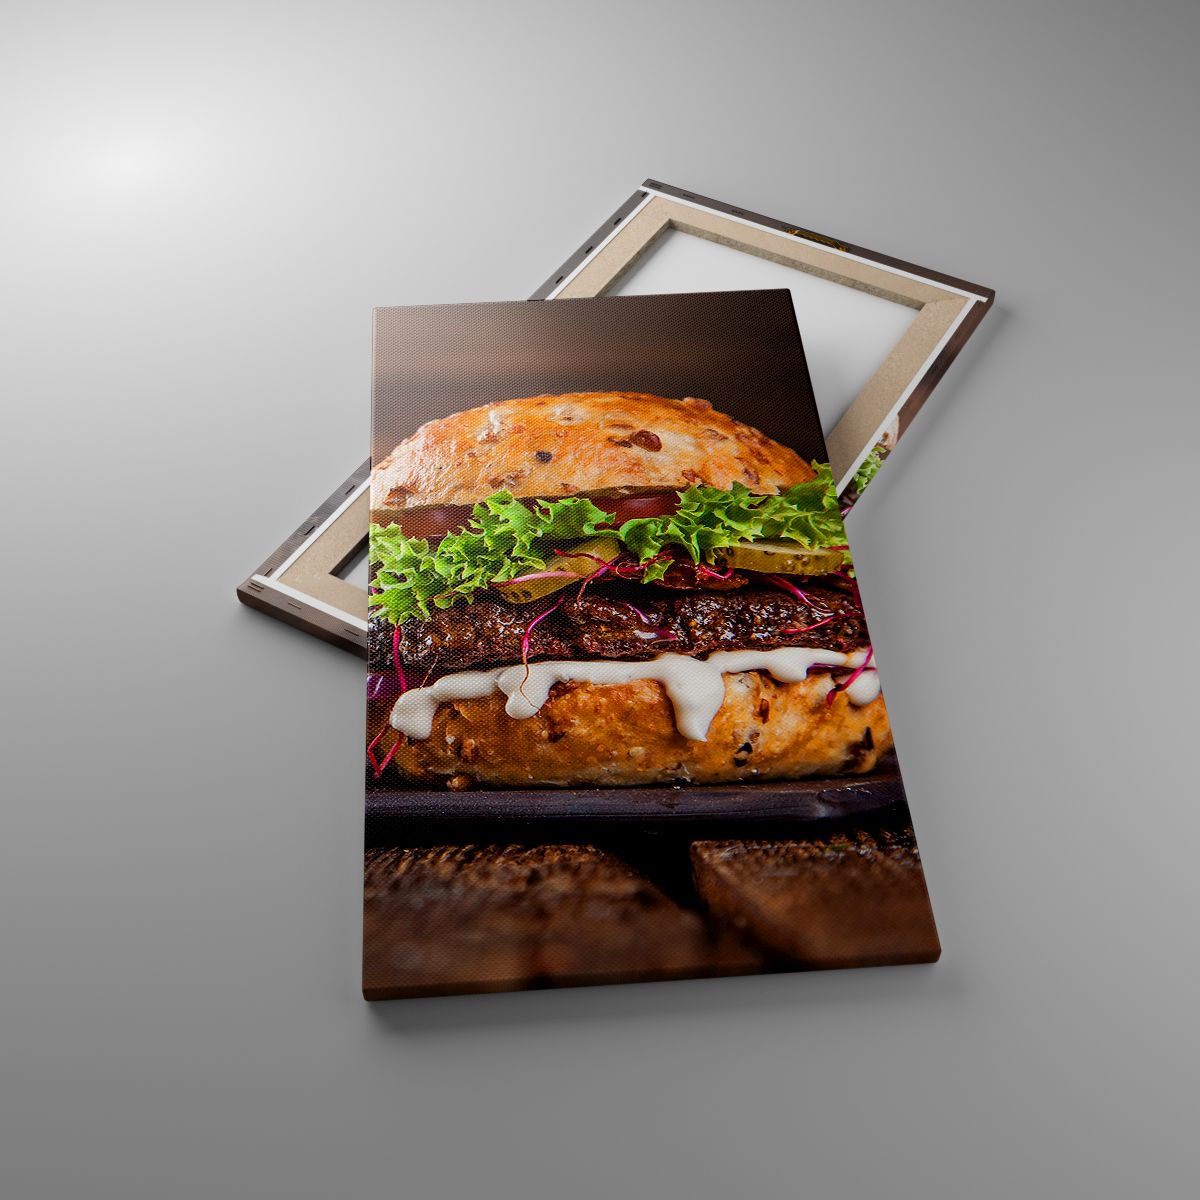 Impression La Gastronomie, Impression Hamburger, Impression Culinaire, Impression Fast Food, Impression Cuisine